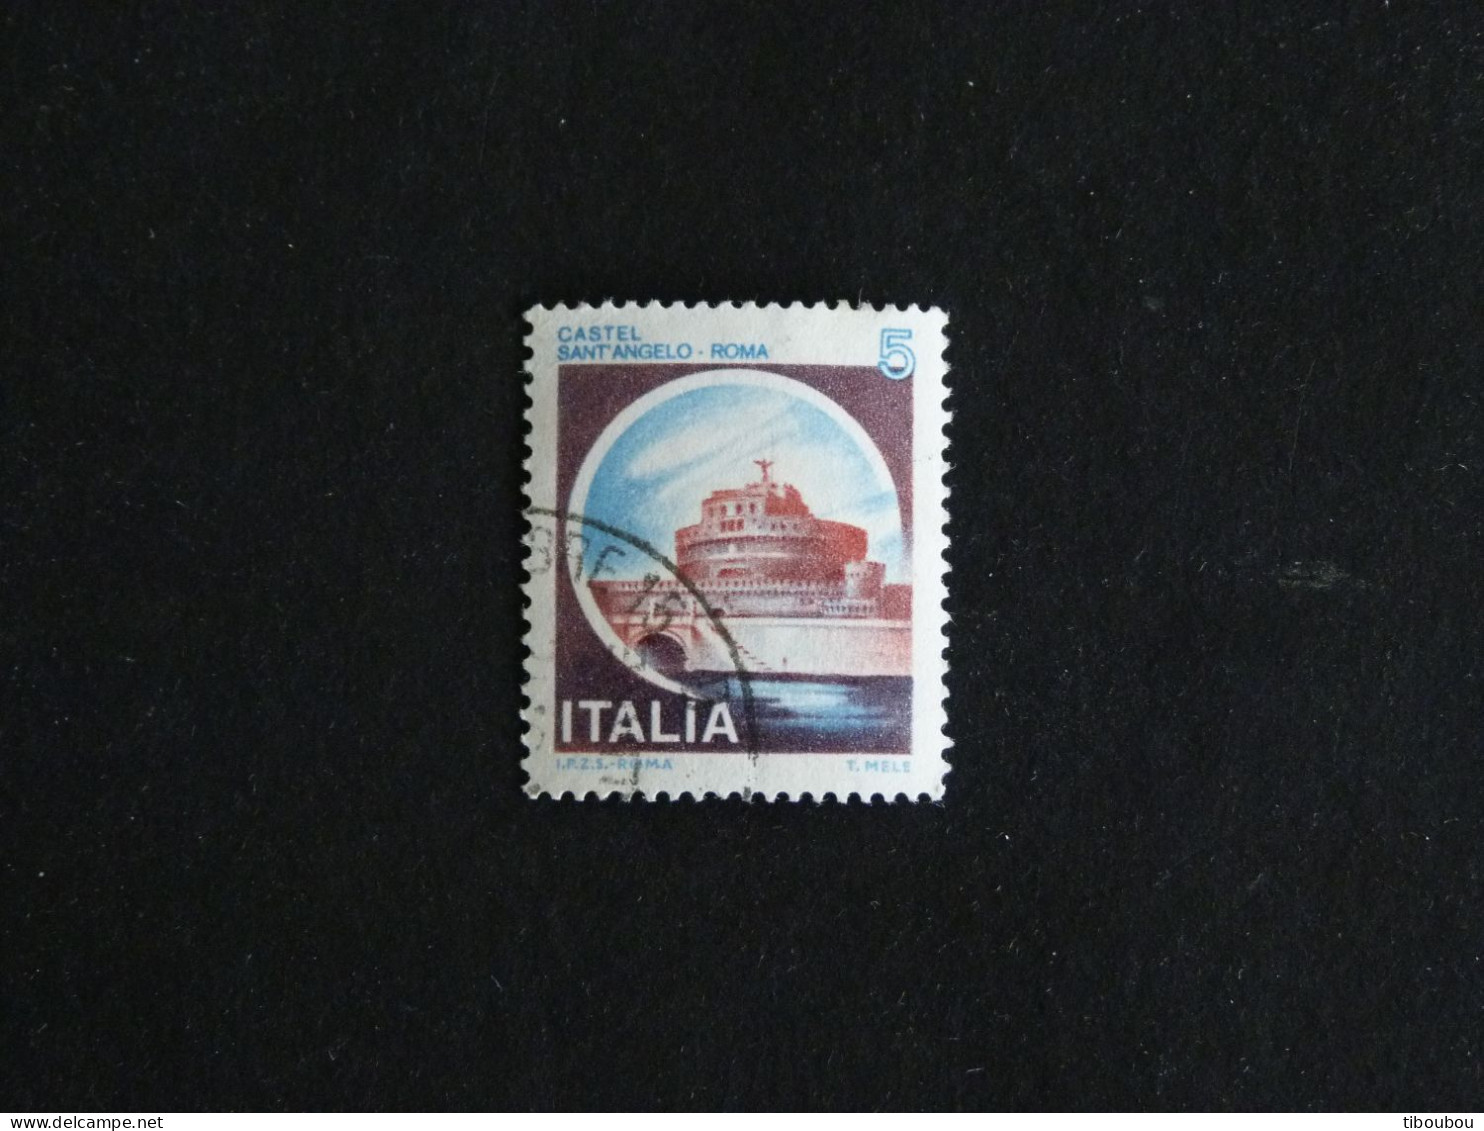 ITALIE ITALIA YT 1433 OBLITERE - CHATEAU SANT' ANGELO ROME - 1971-80: Usati